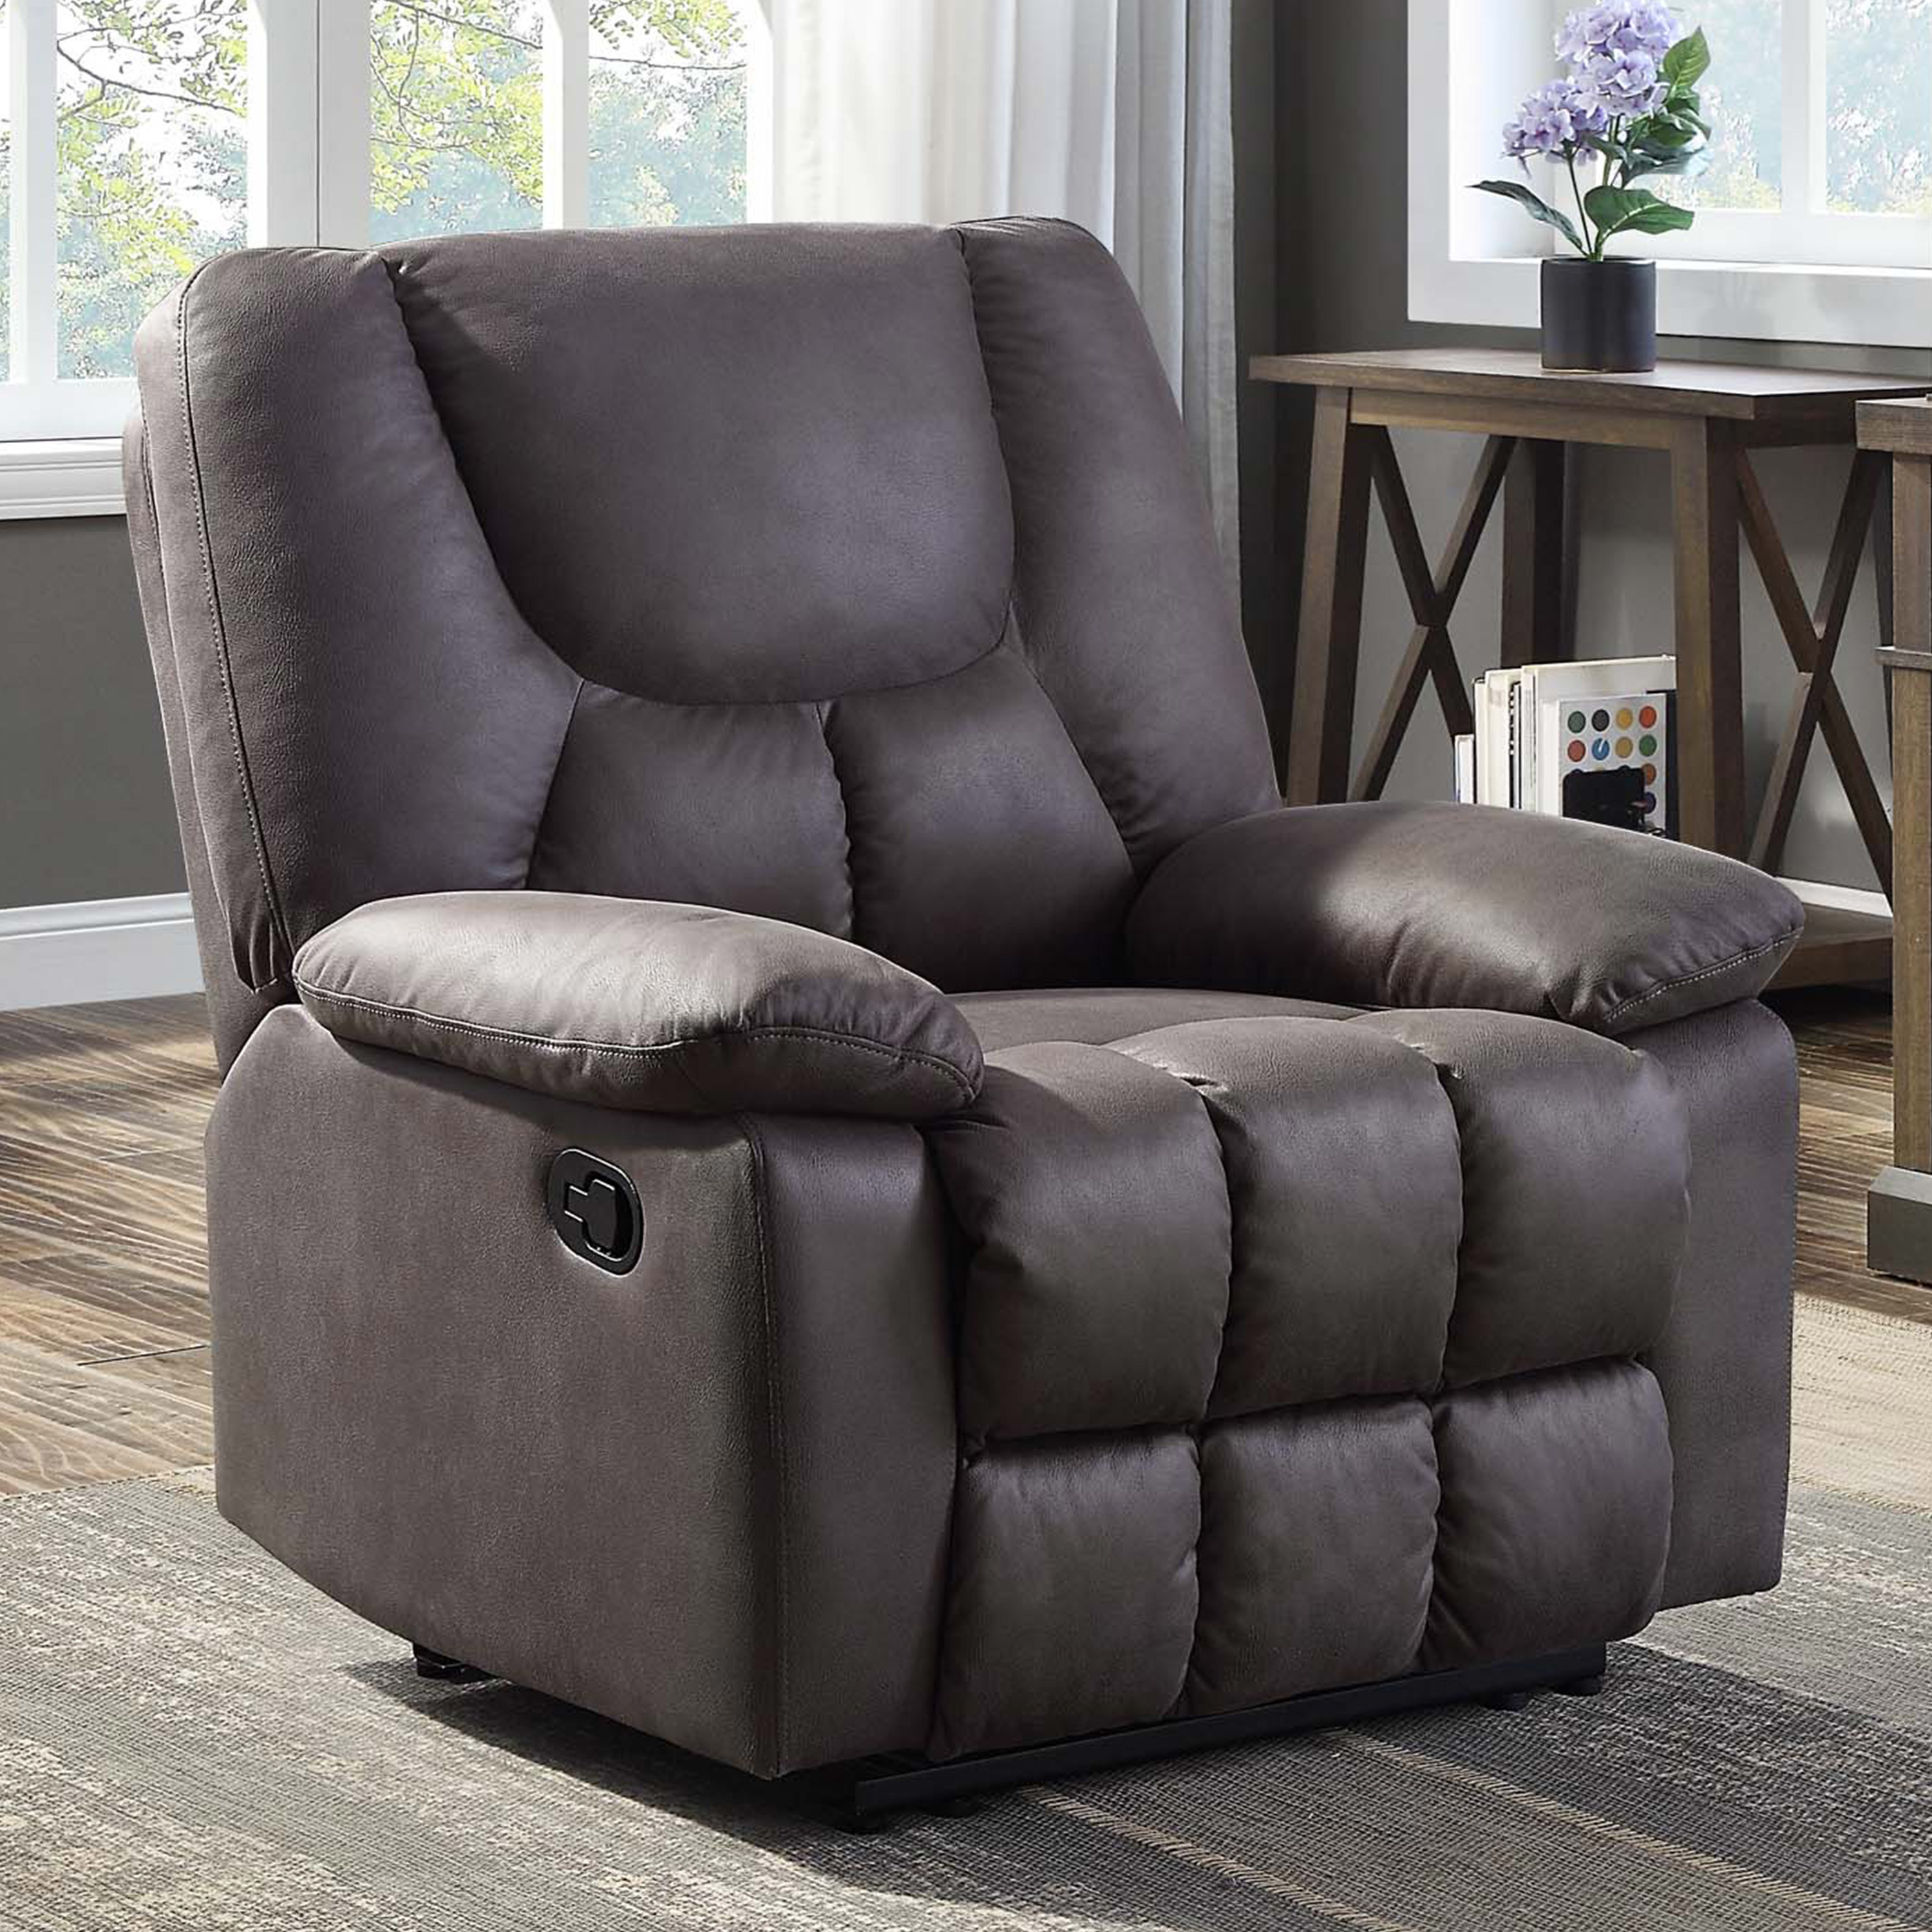 plush grey recliner